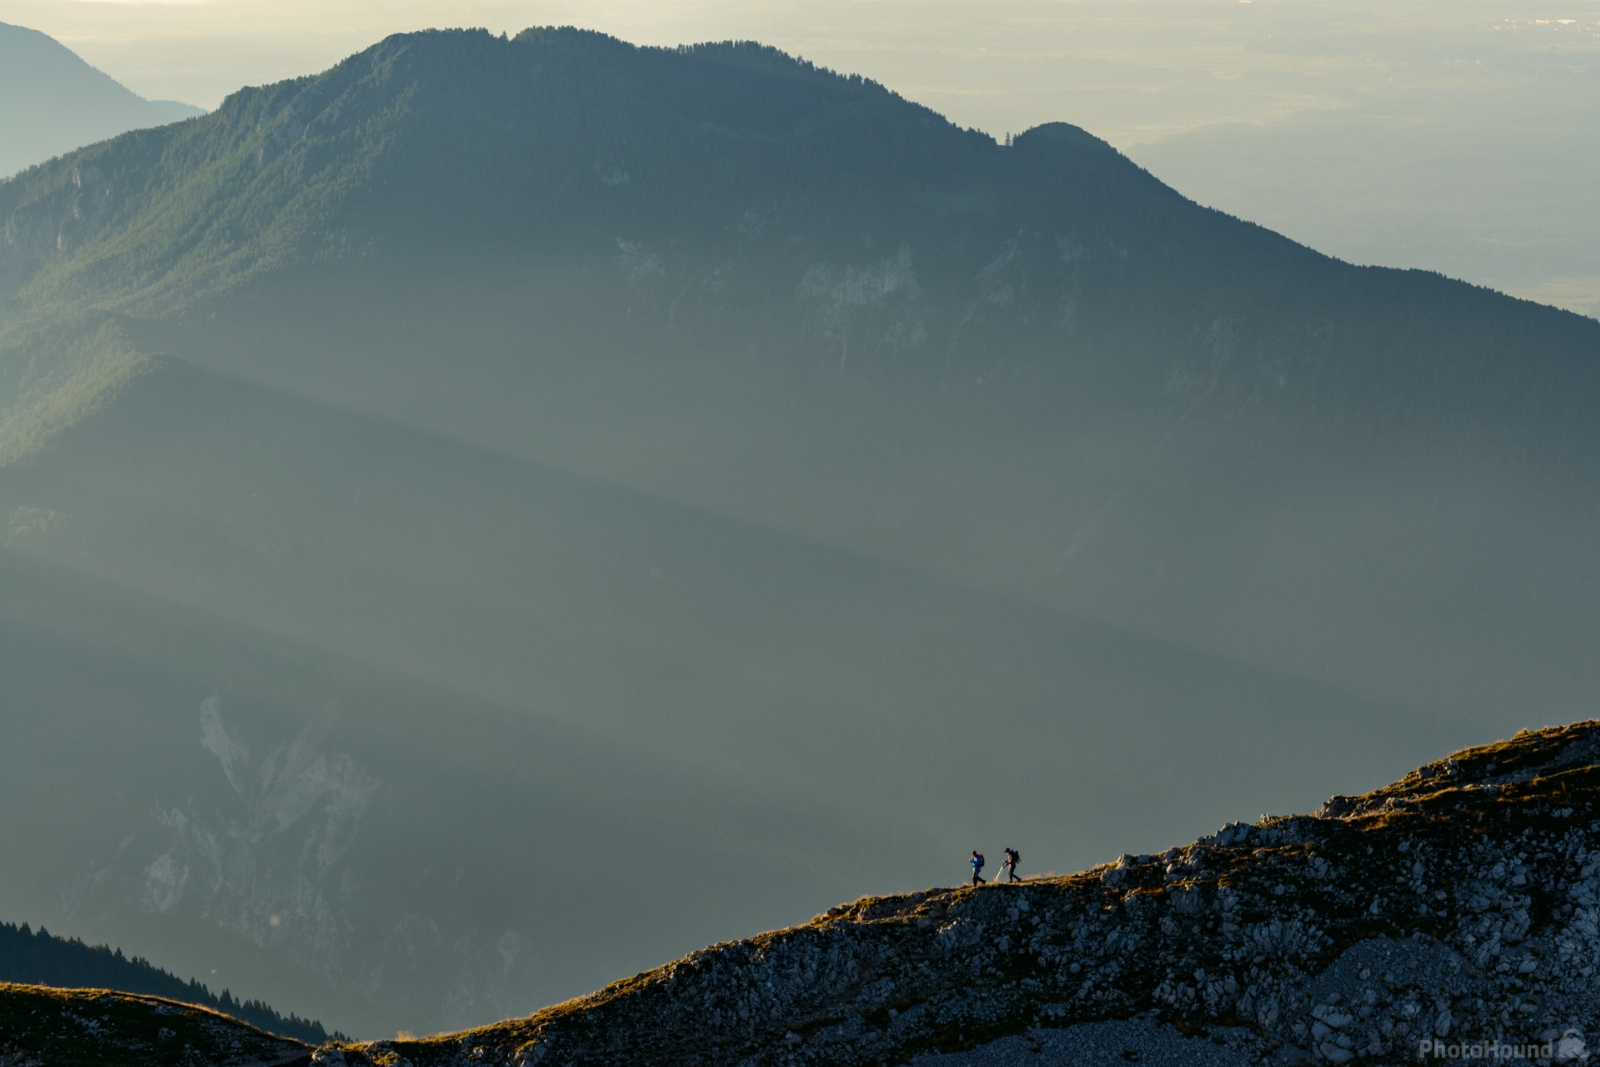 Image of Mt Stol / Hochstuhl (2236m) by Luka Esenko